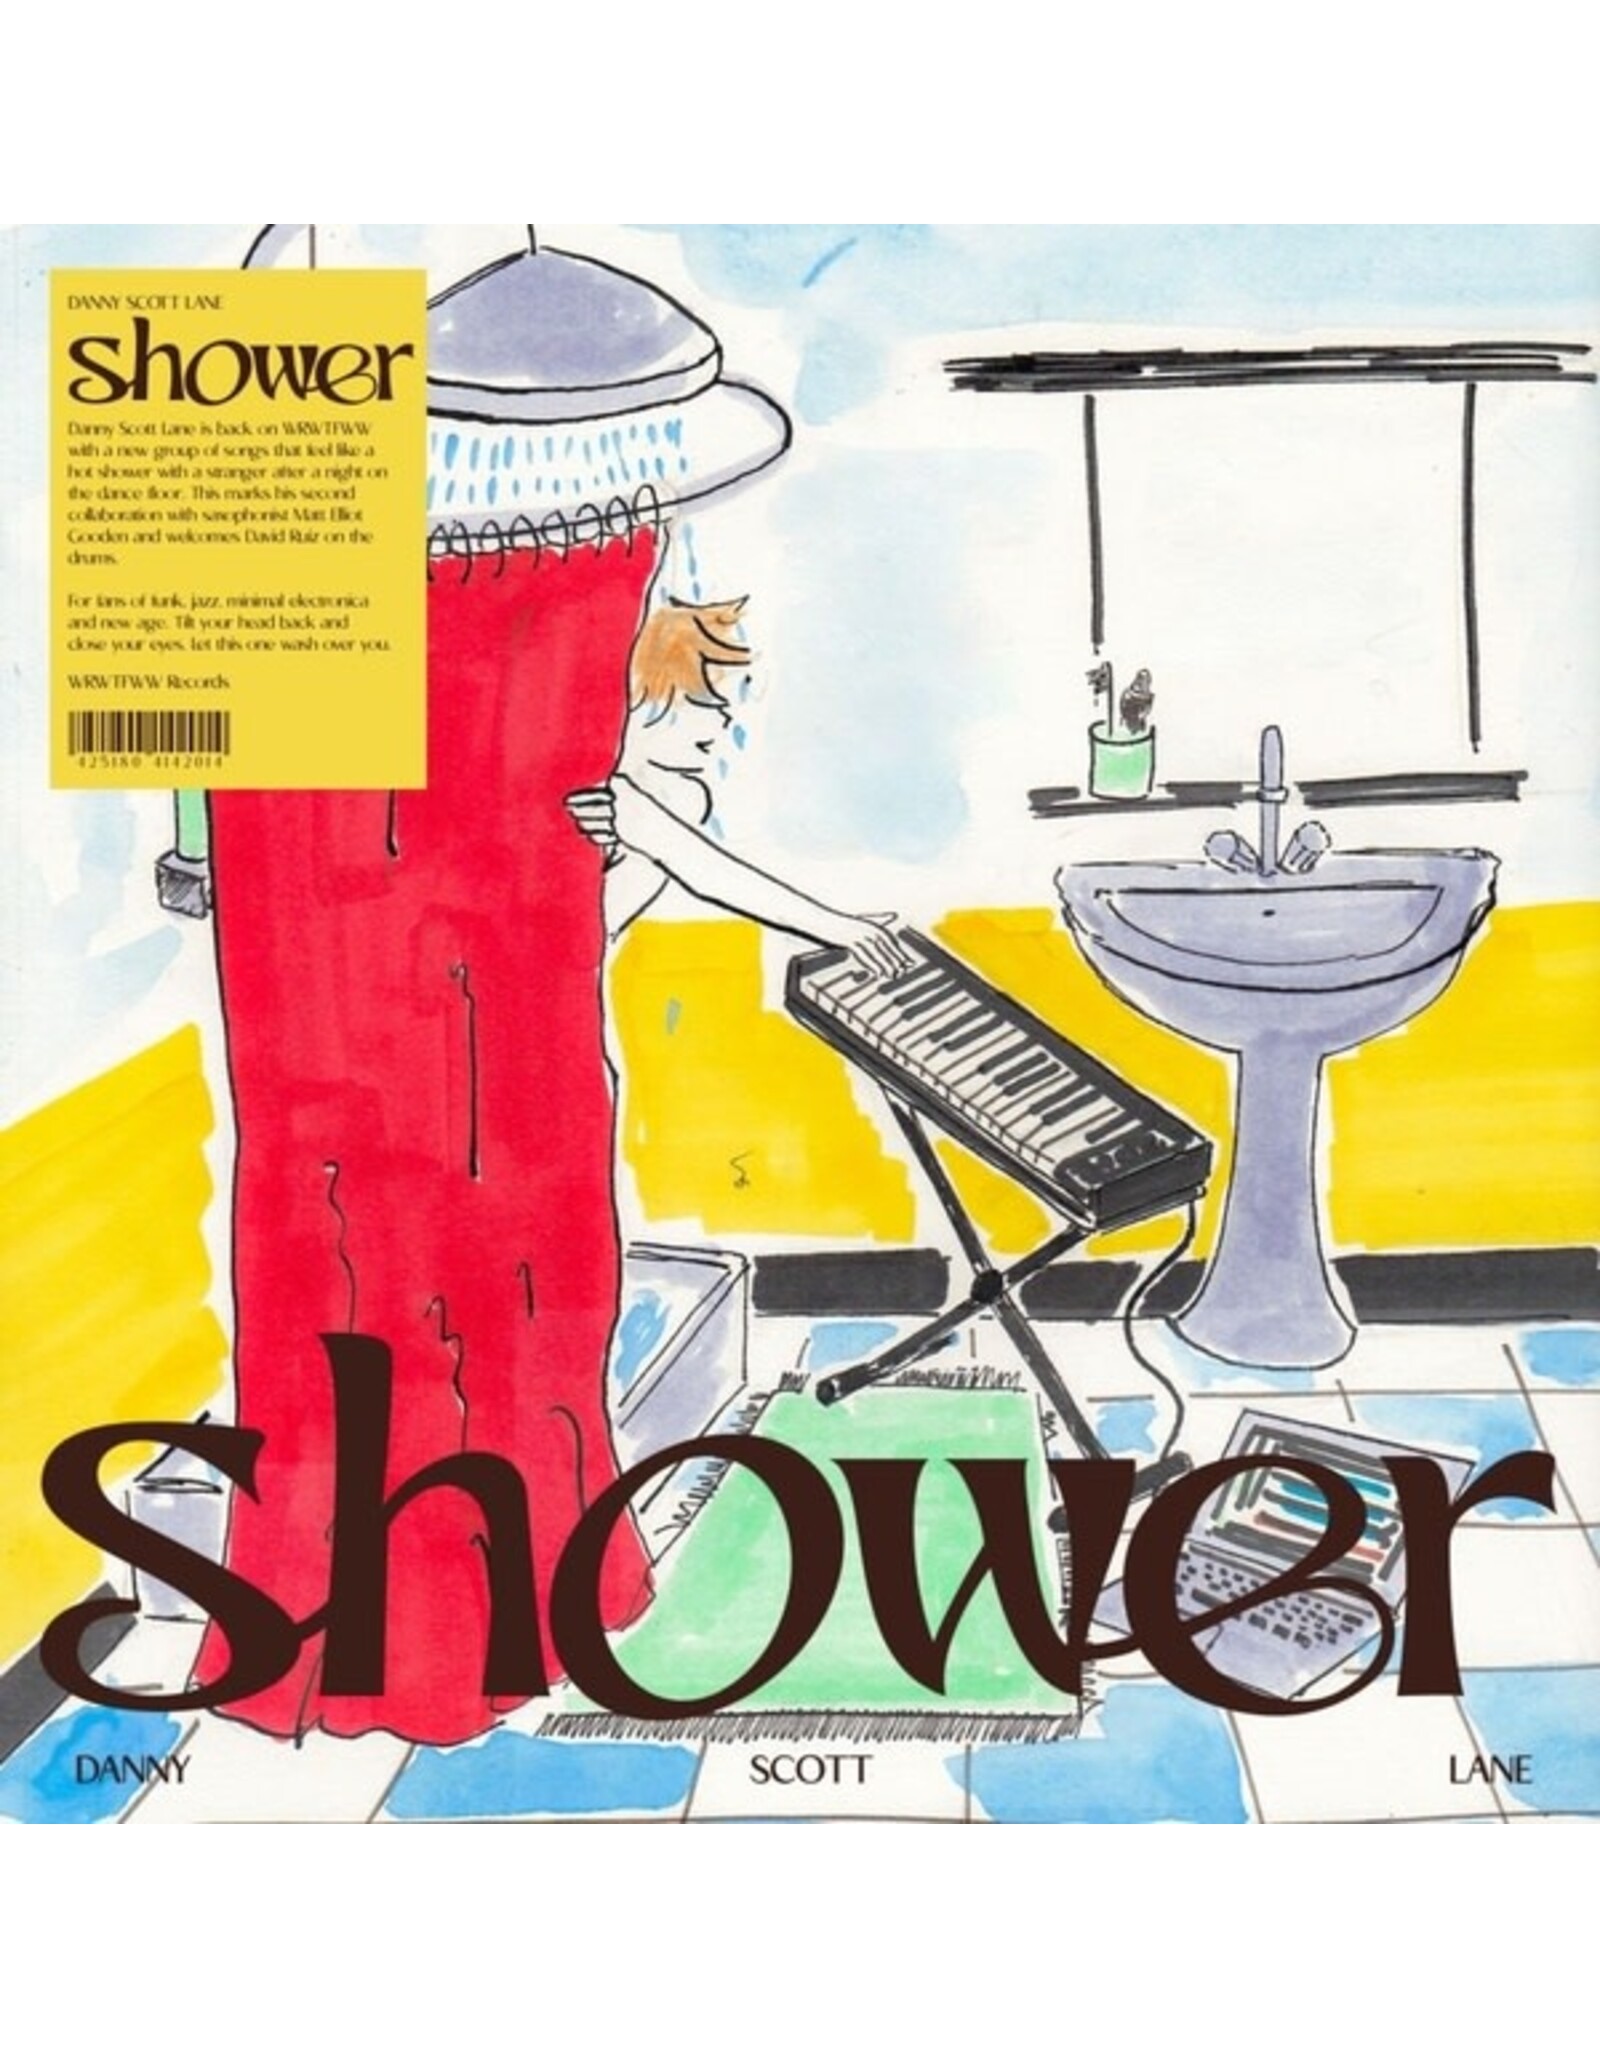 WRWTFWW Lane, Danny Scott: Shower LP